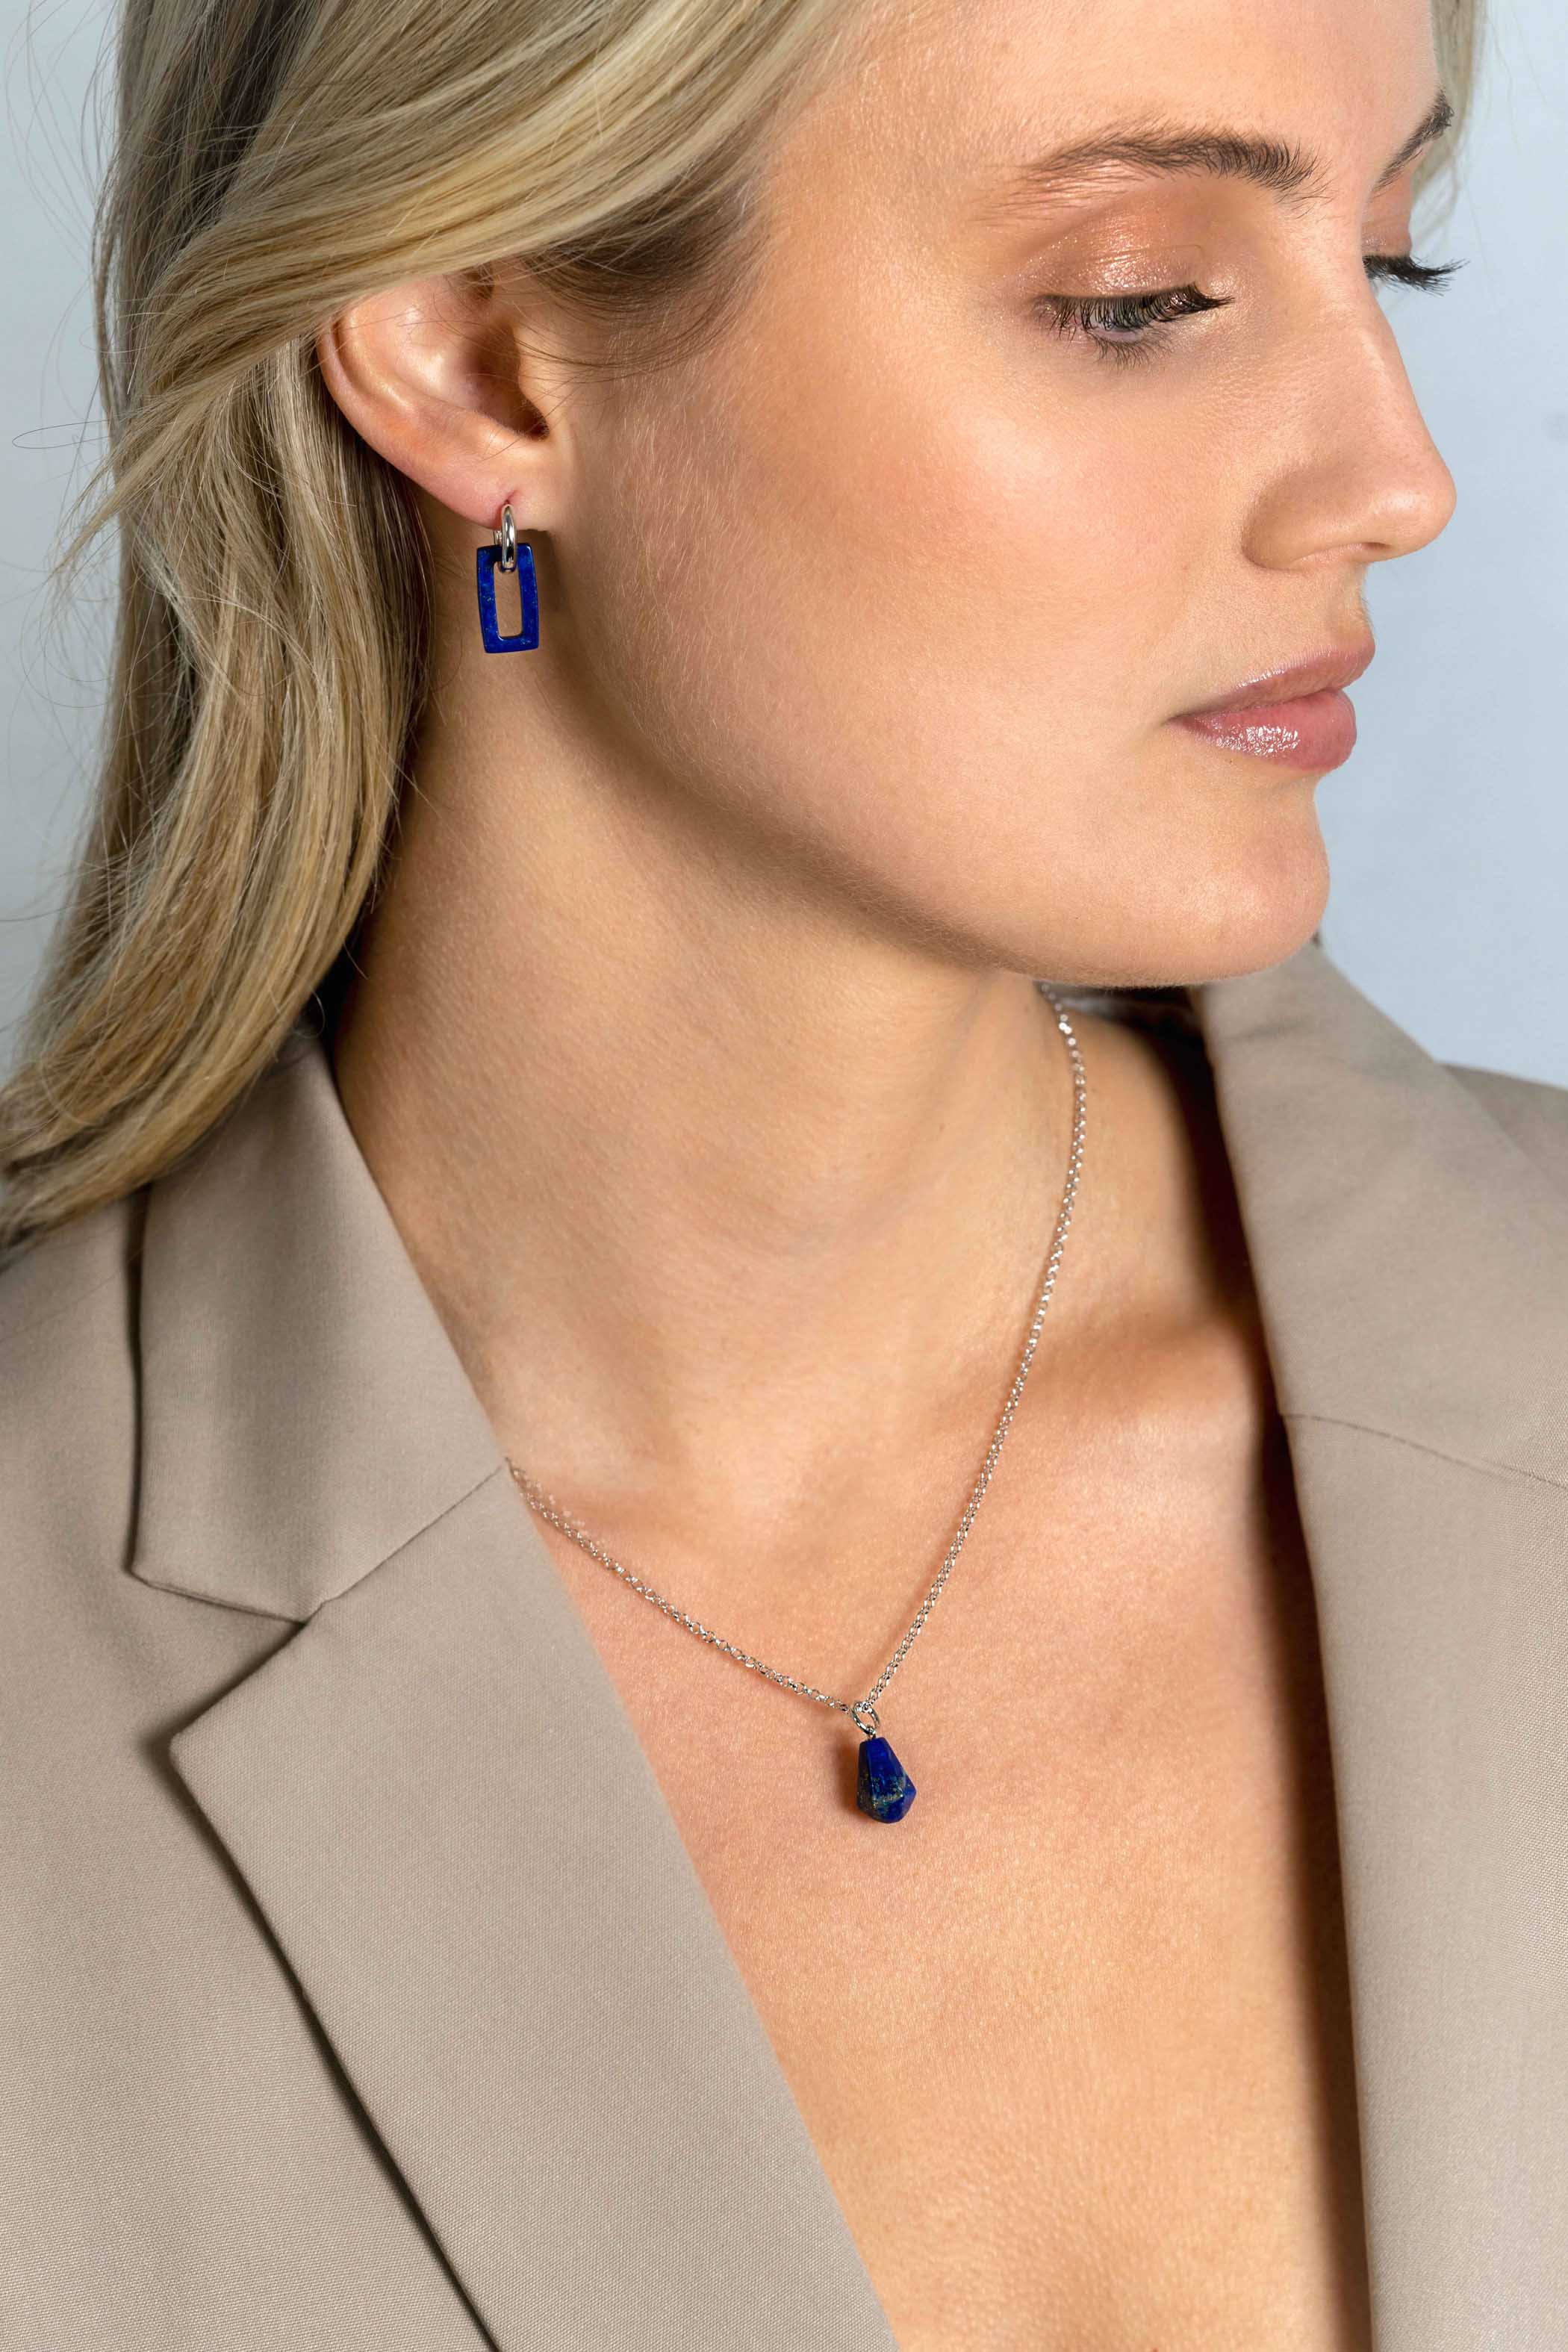 16mm ZINZI Earrings Pendants Rectangle in Lapis Lazuli ZICH2231 (excl. hoop earrings)